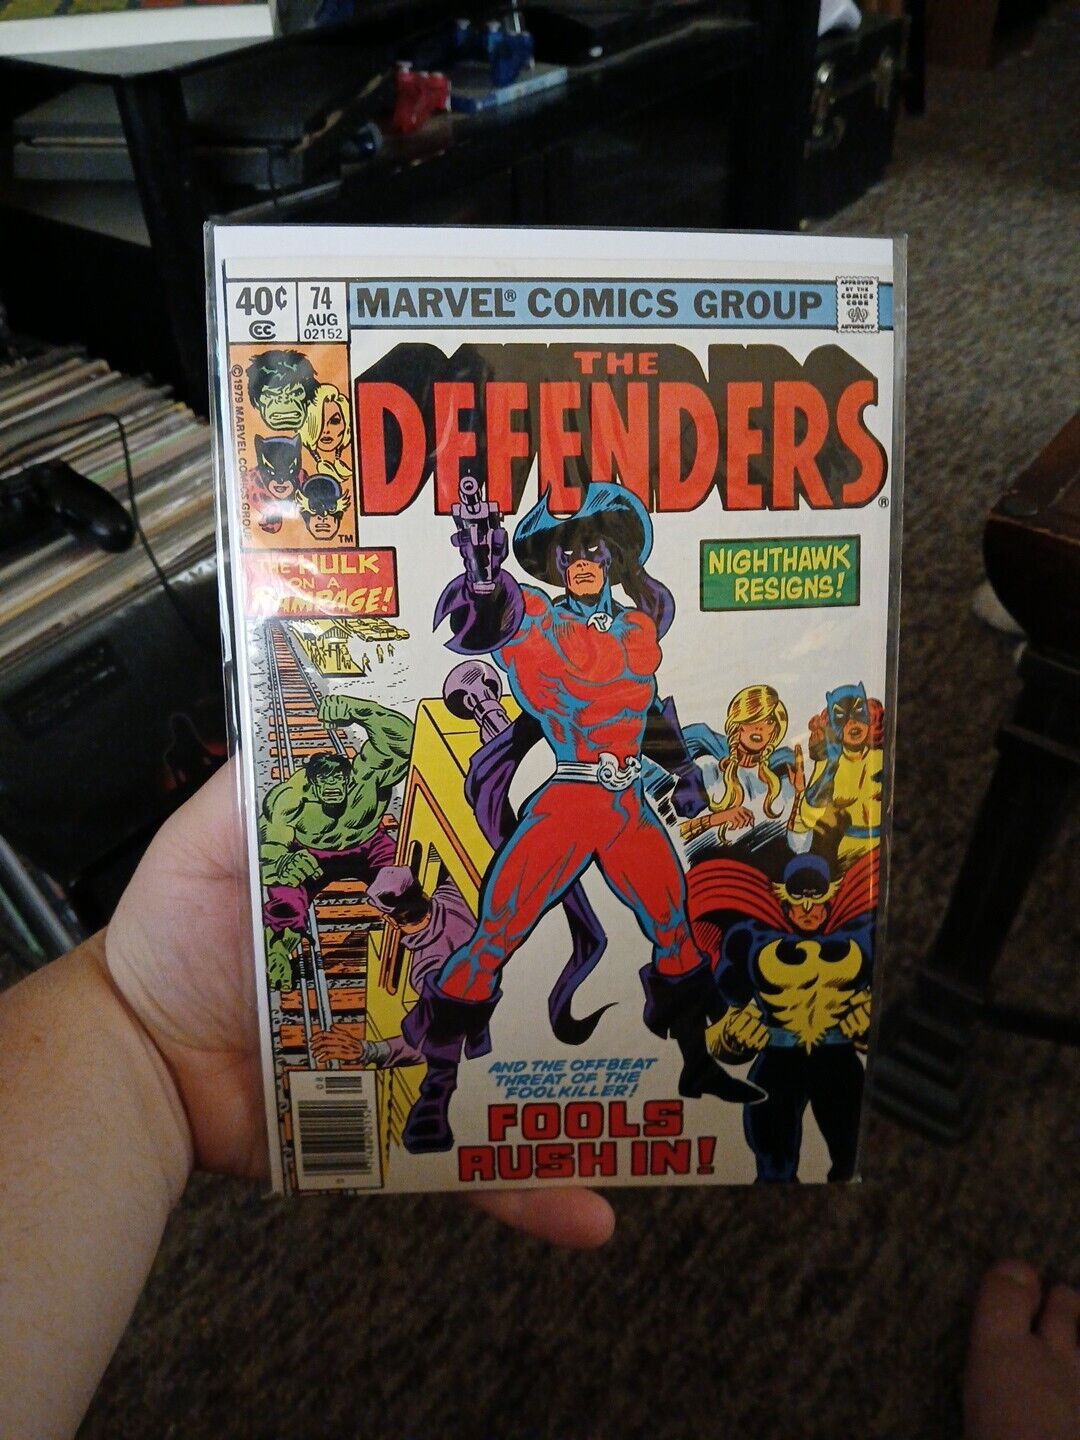 The Defenders #74 Comic Book August 1979 Marvel Comics